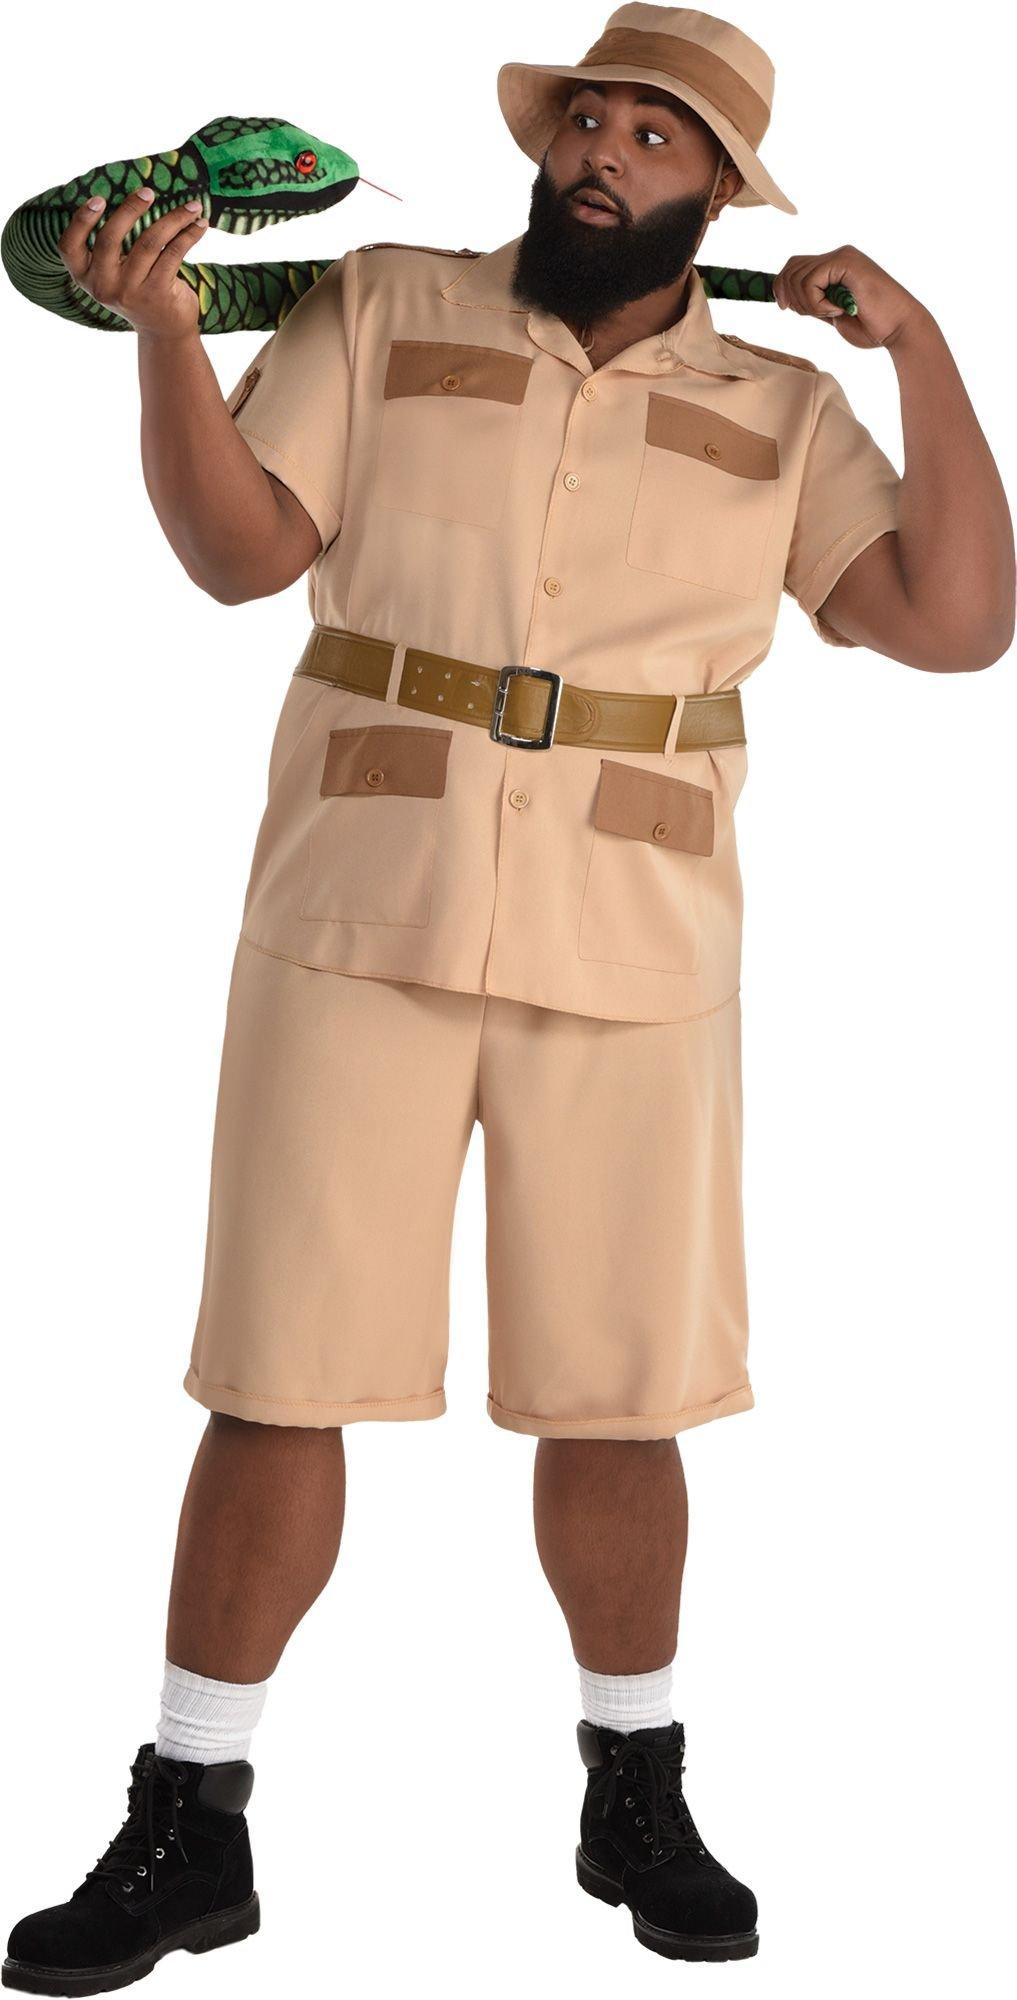 printable safari tour guide costume